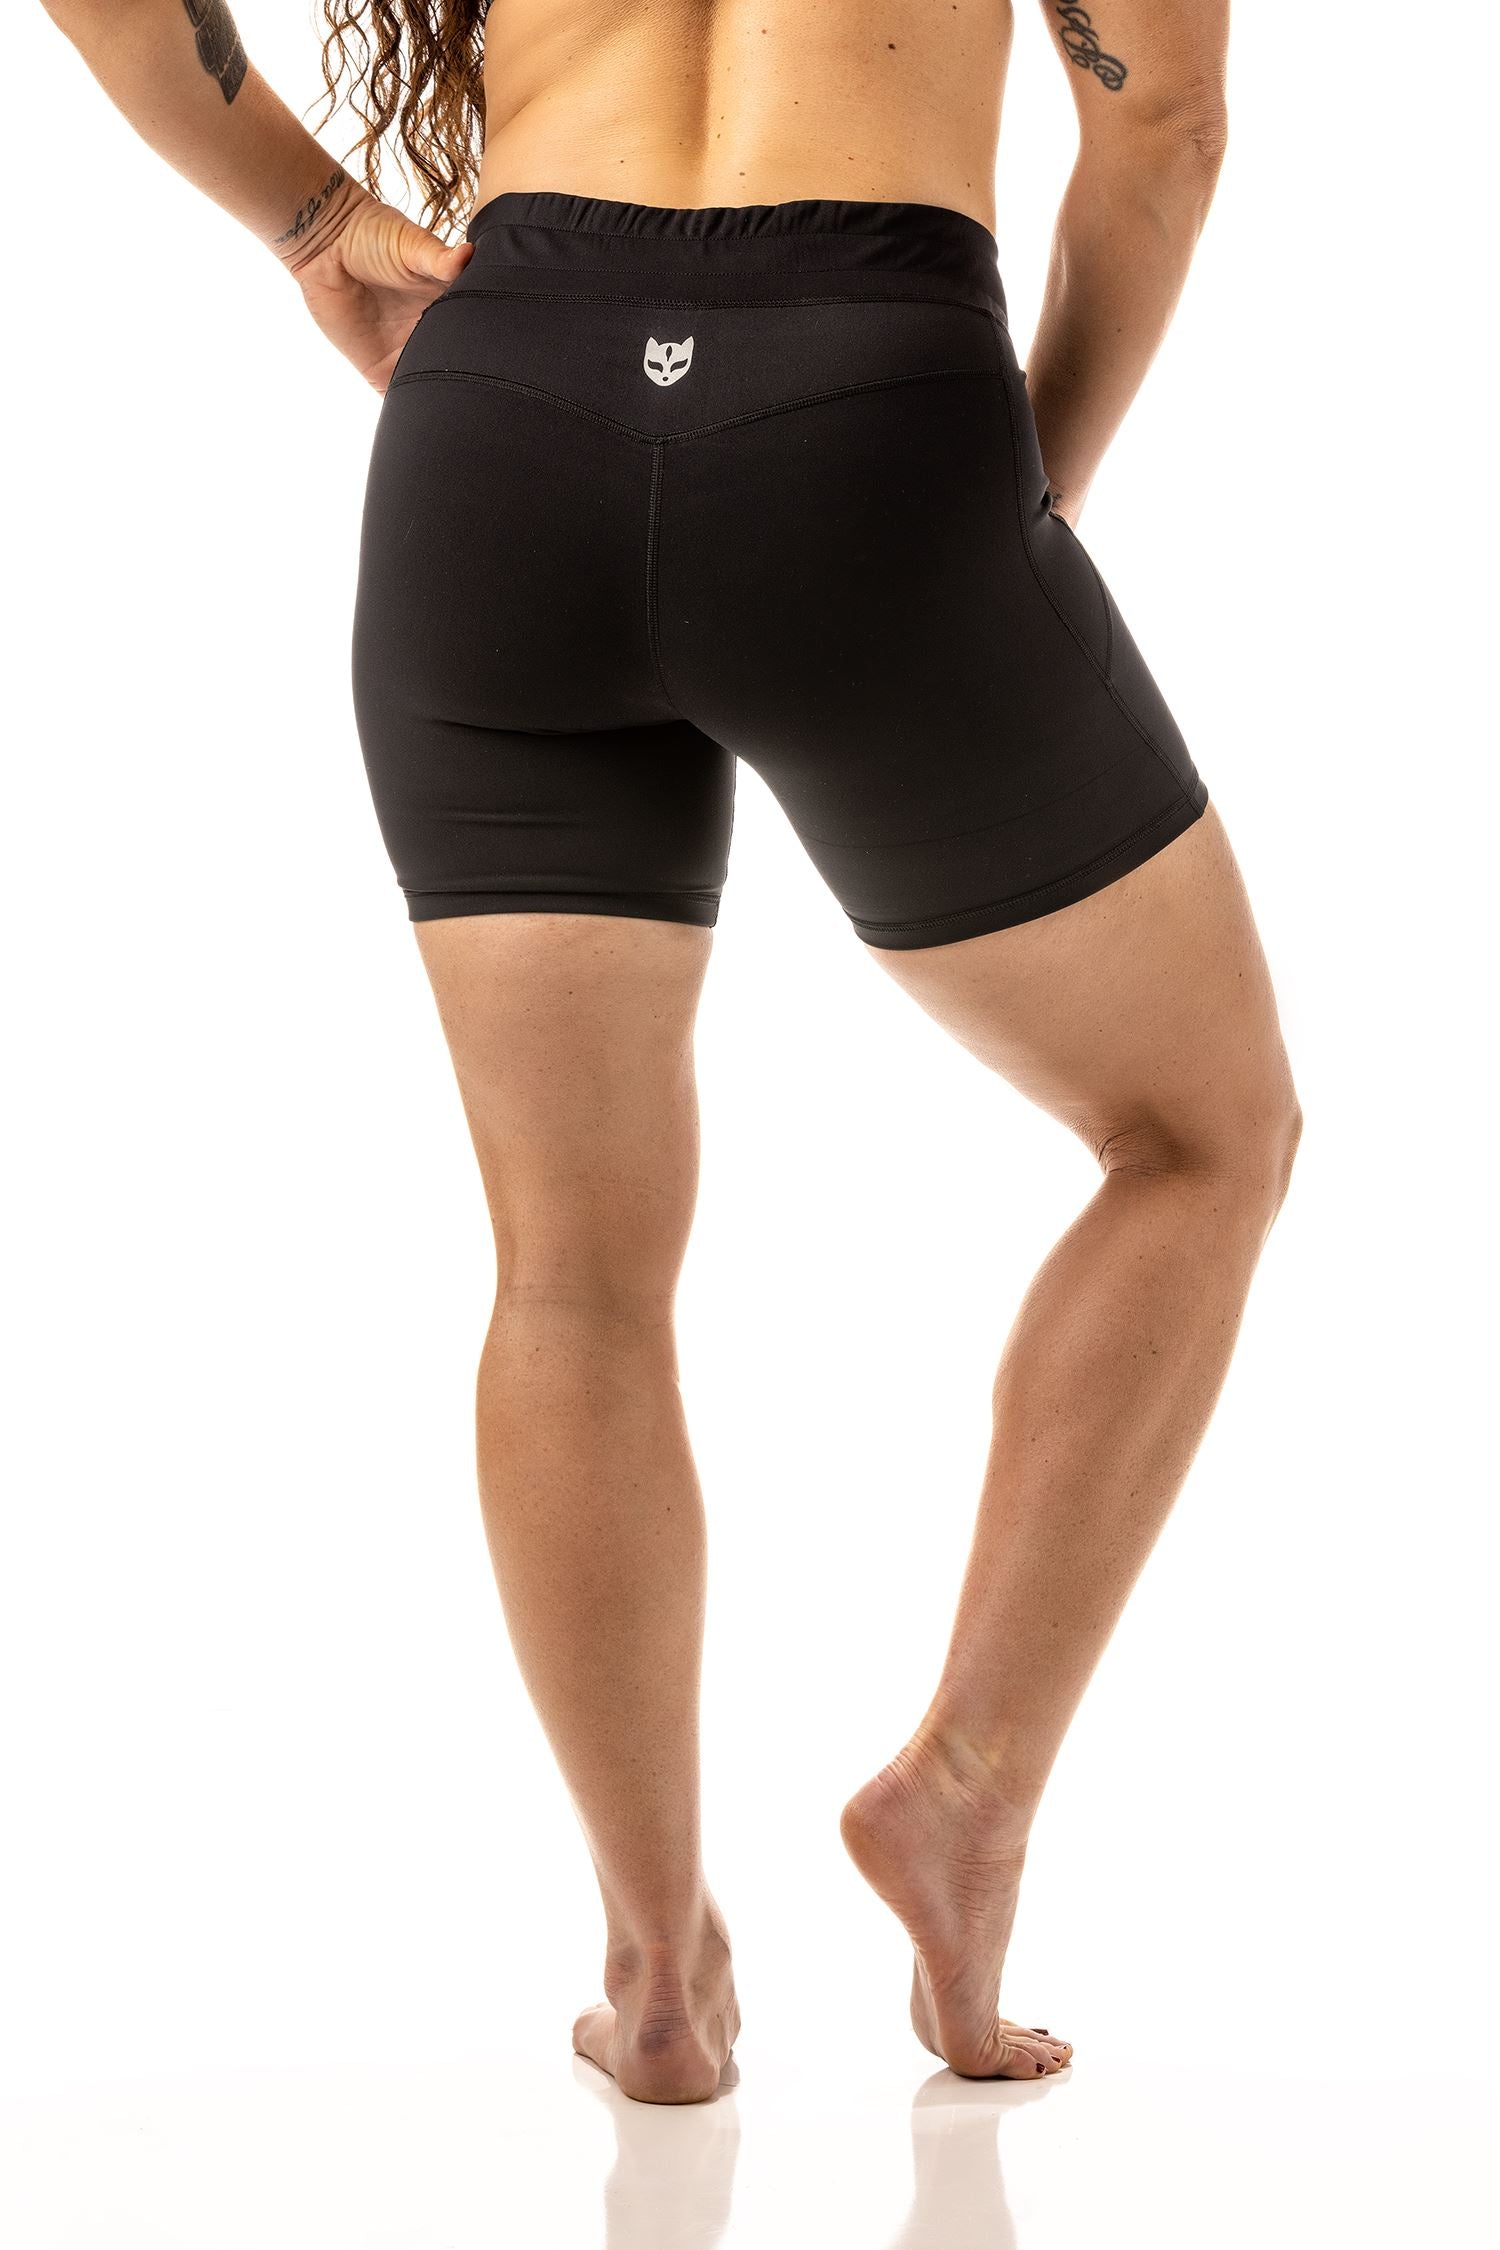 Venum Lightning Double Layer Shorts - For Women - Black/Gold - Venum